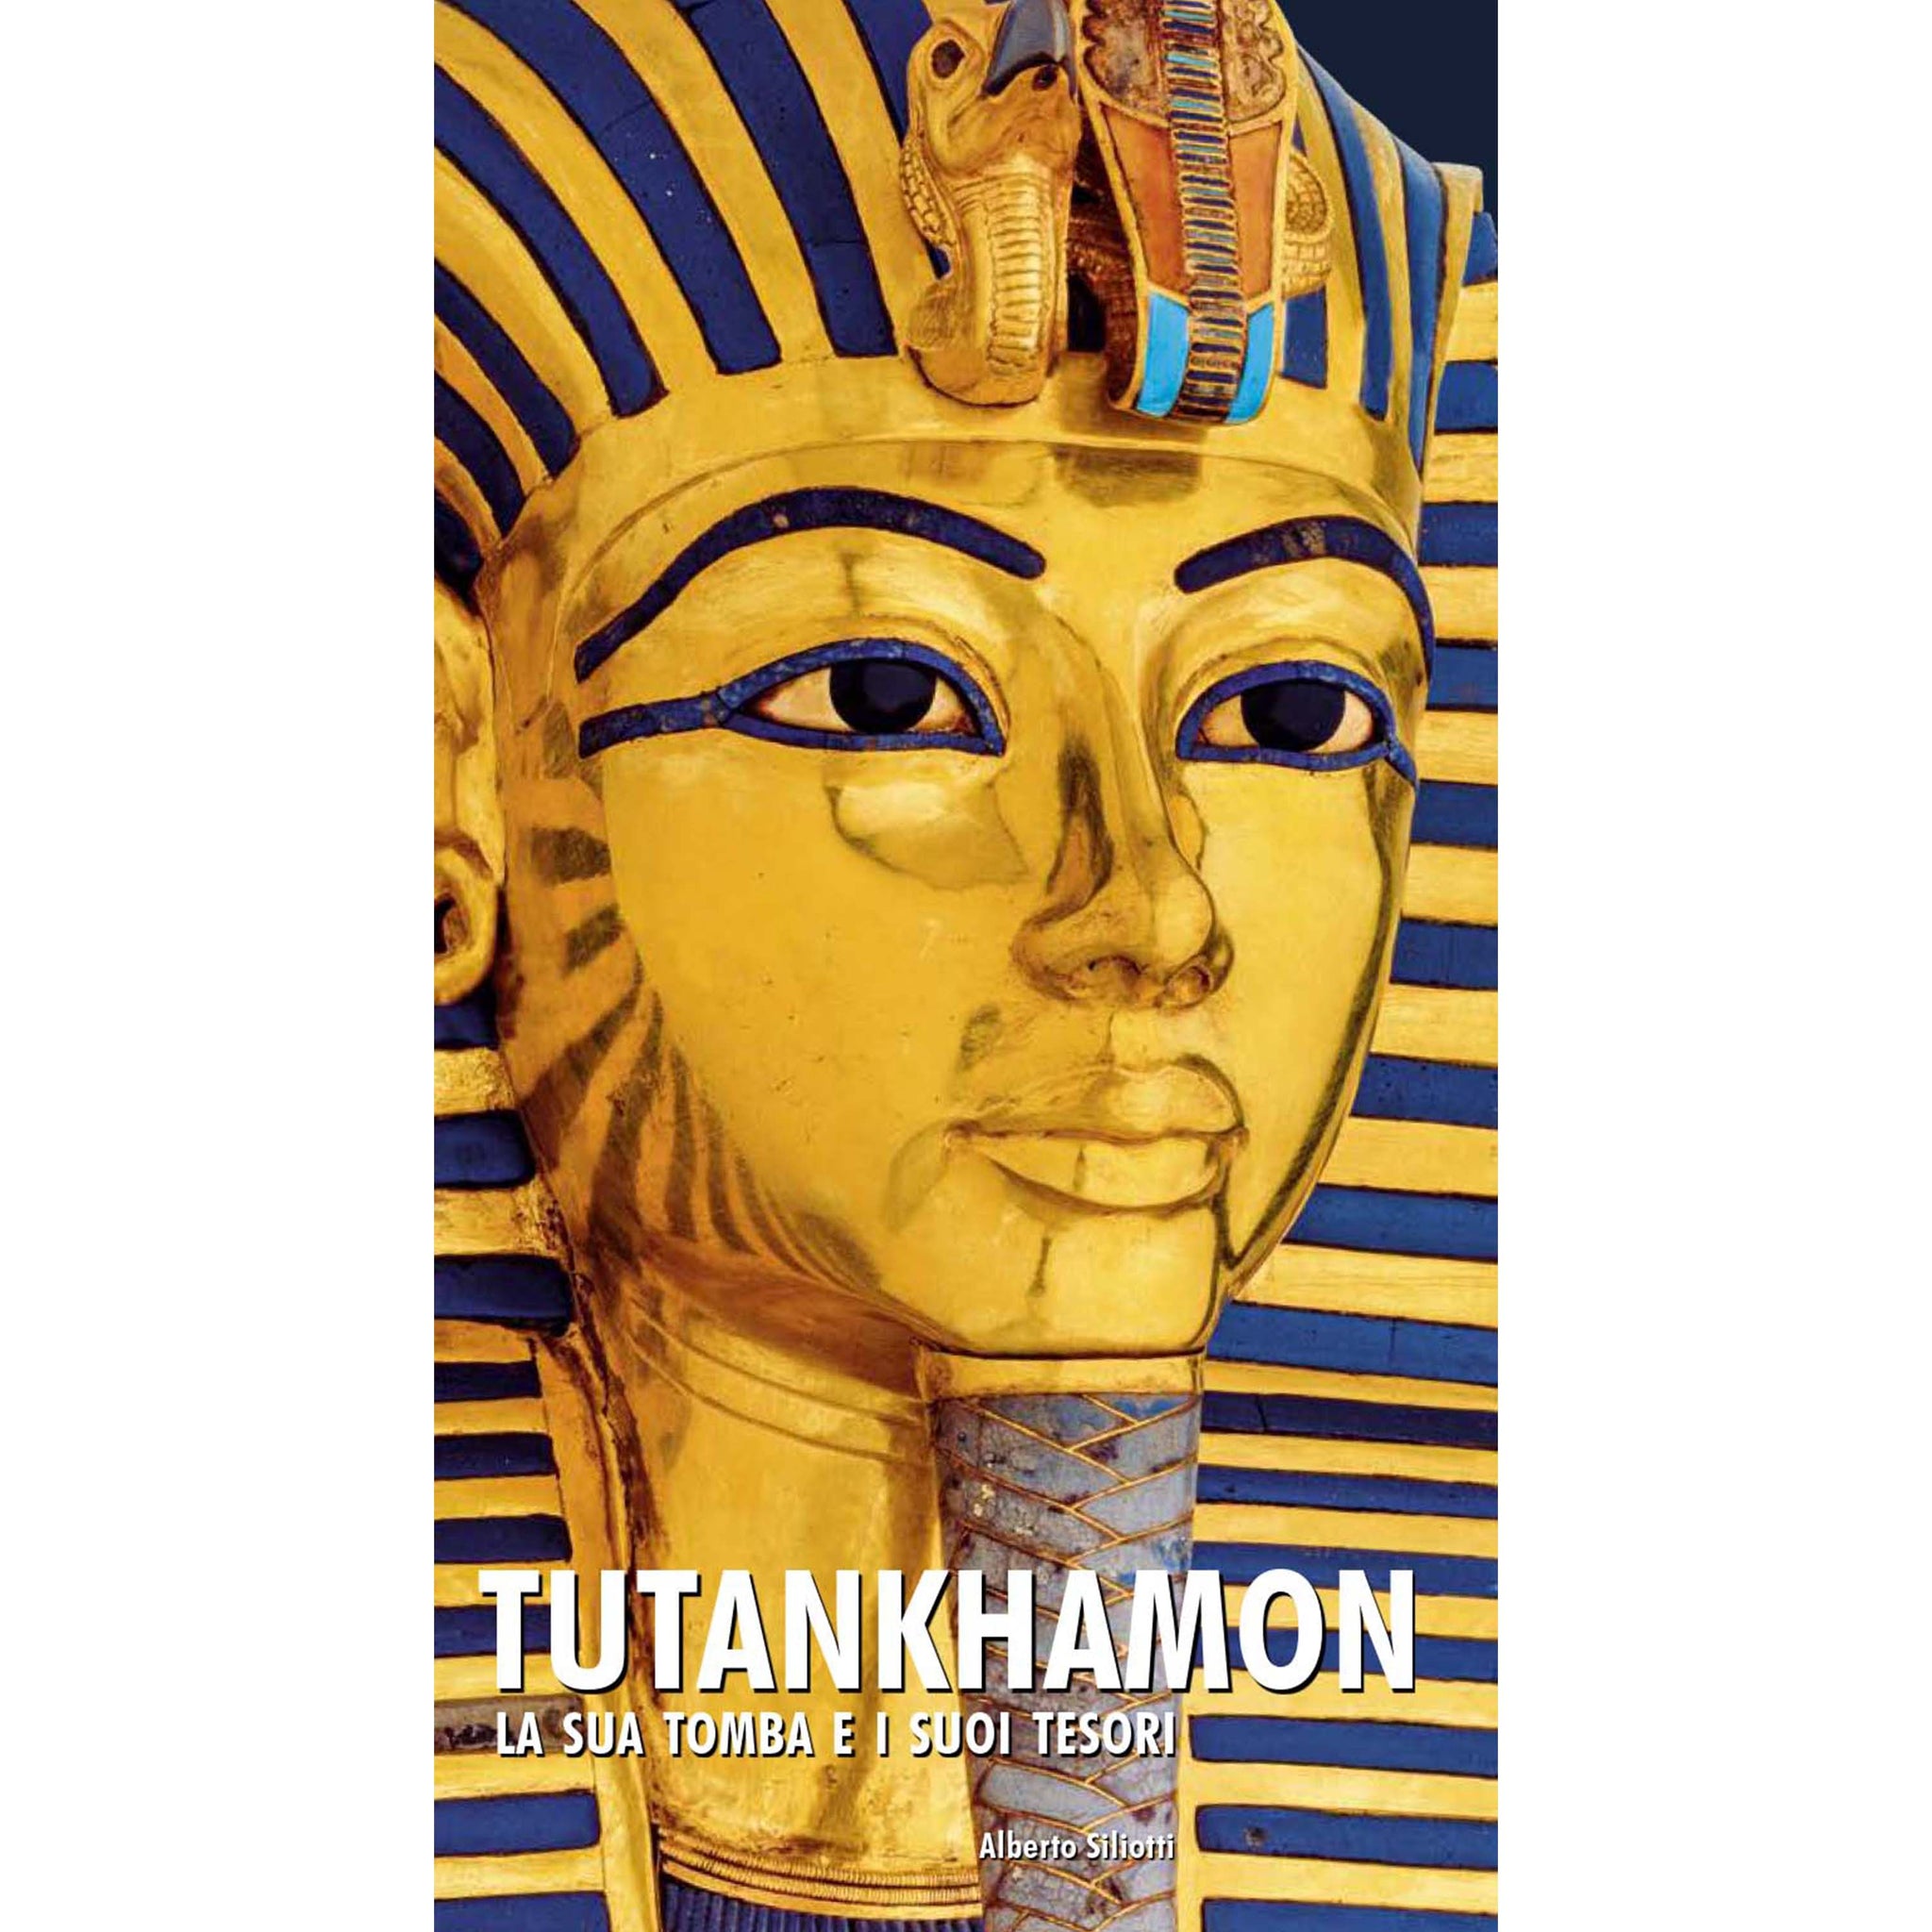 Tutankhamun - His tomb and his treasures